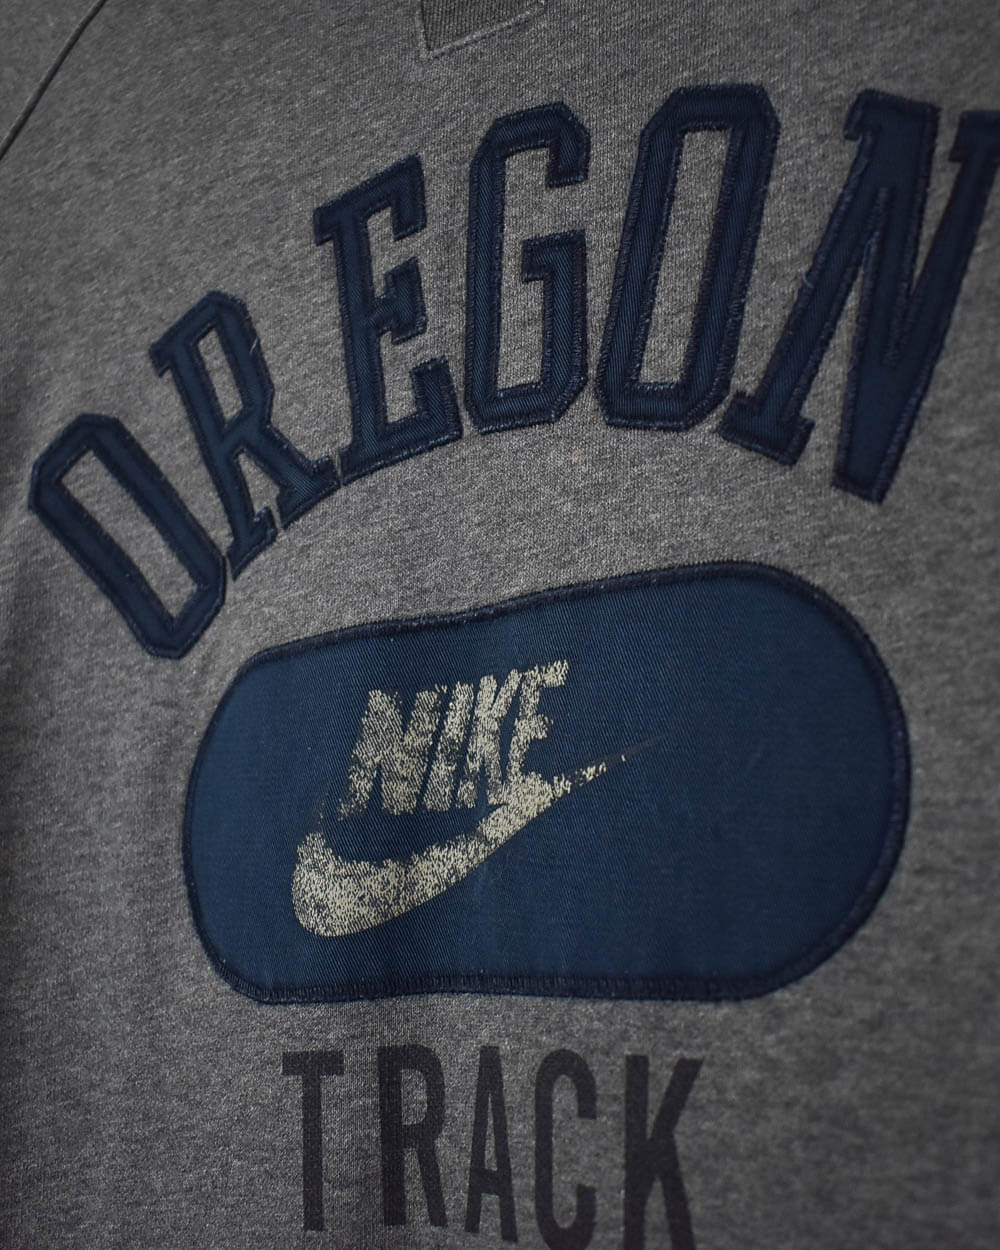 Stone Nike Oregon Track Hoodie - X-Large